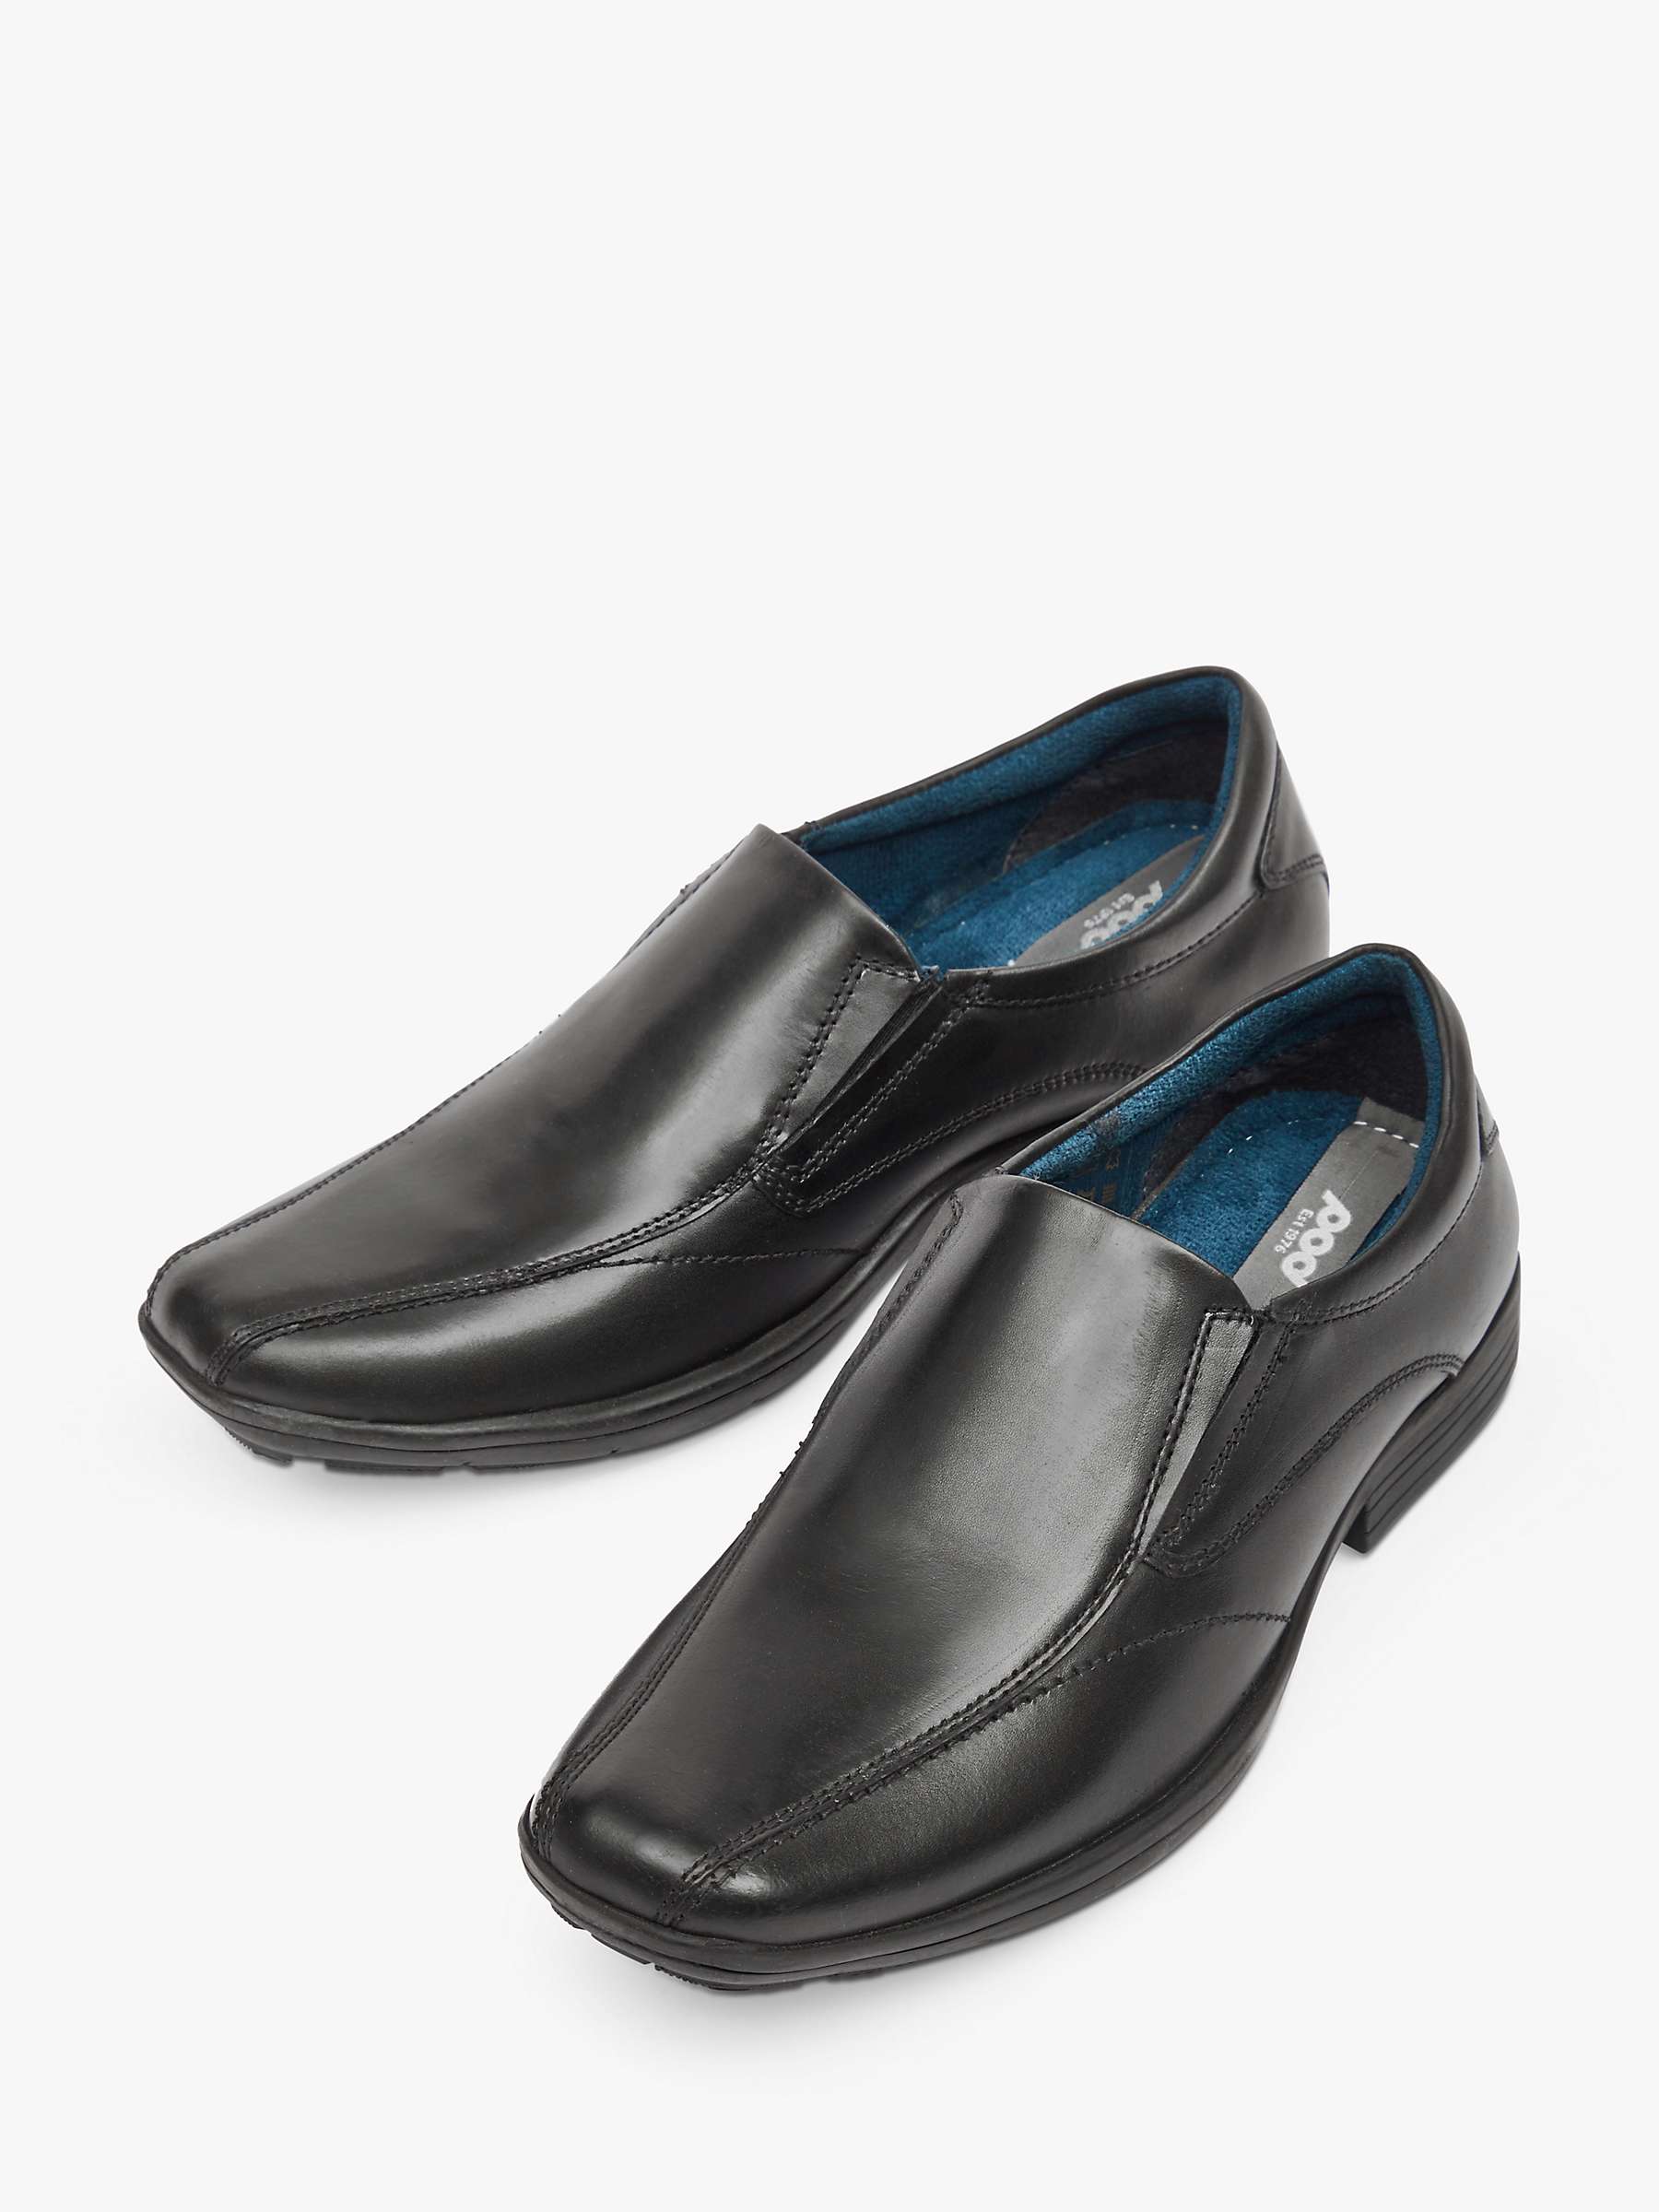 Buy Pod Kids' Dundee Leather Shoes, Black Online at johnlewis.com